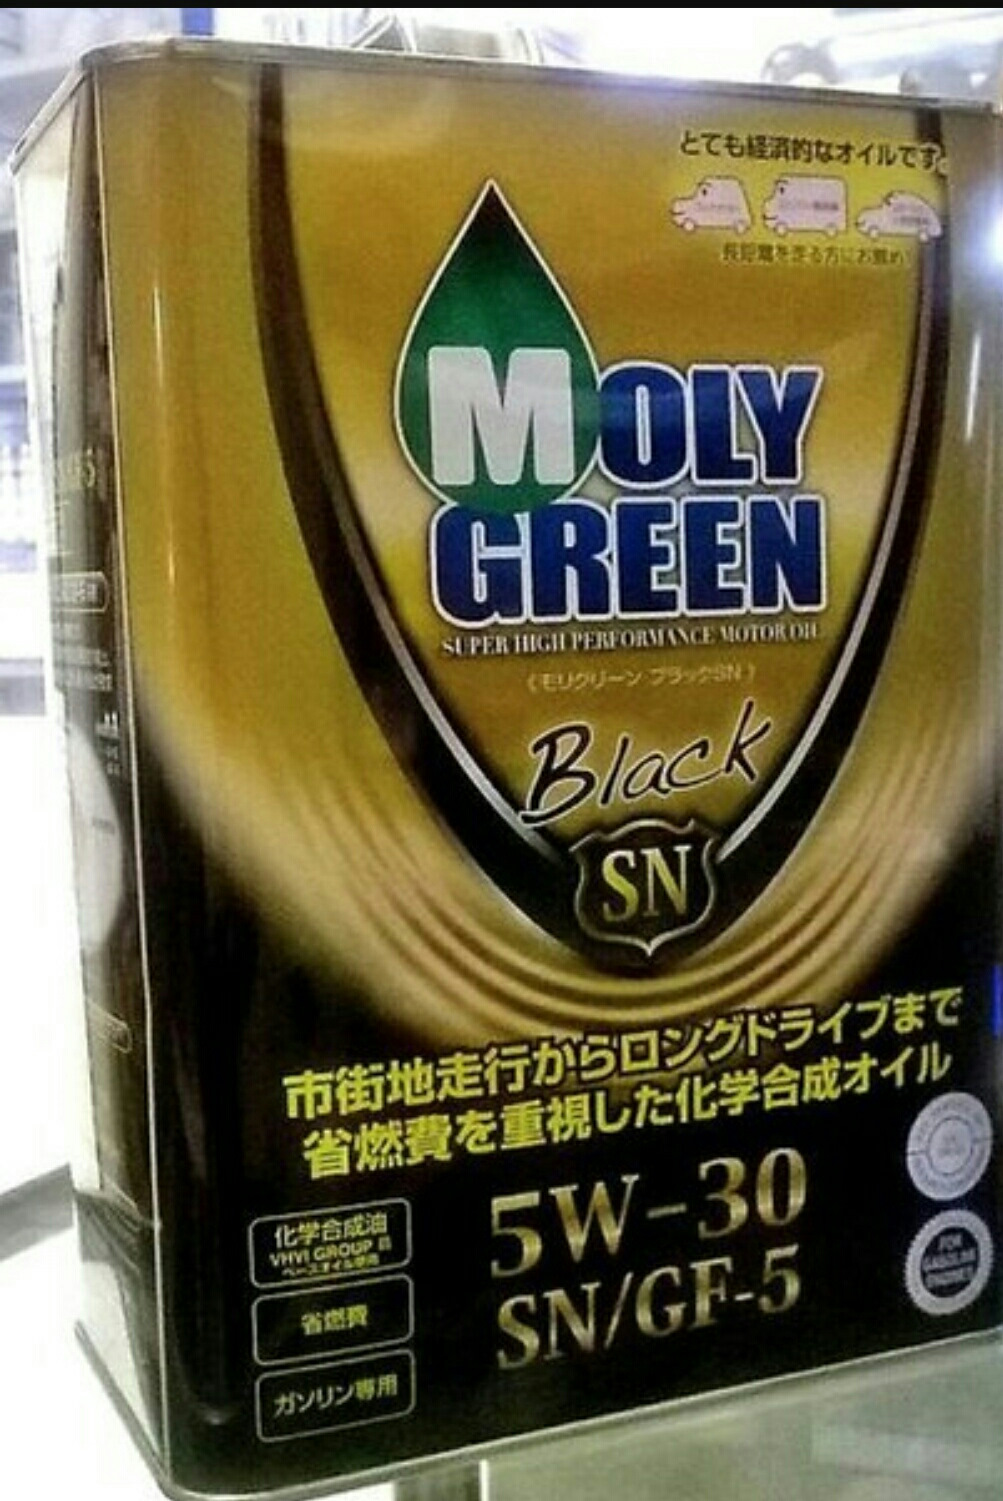 Моли грин 5w30 купить. Моли Грин 5w30. Moly Green Black SN/gf-5 5w-30 4л. Моли Грин Блэк 5w30. Масло моли Грин 5w30.